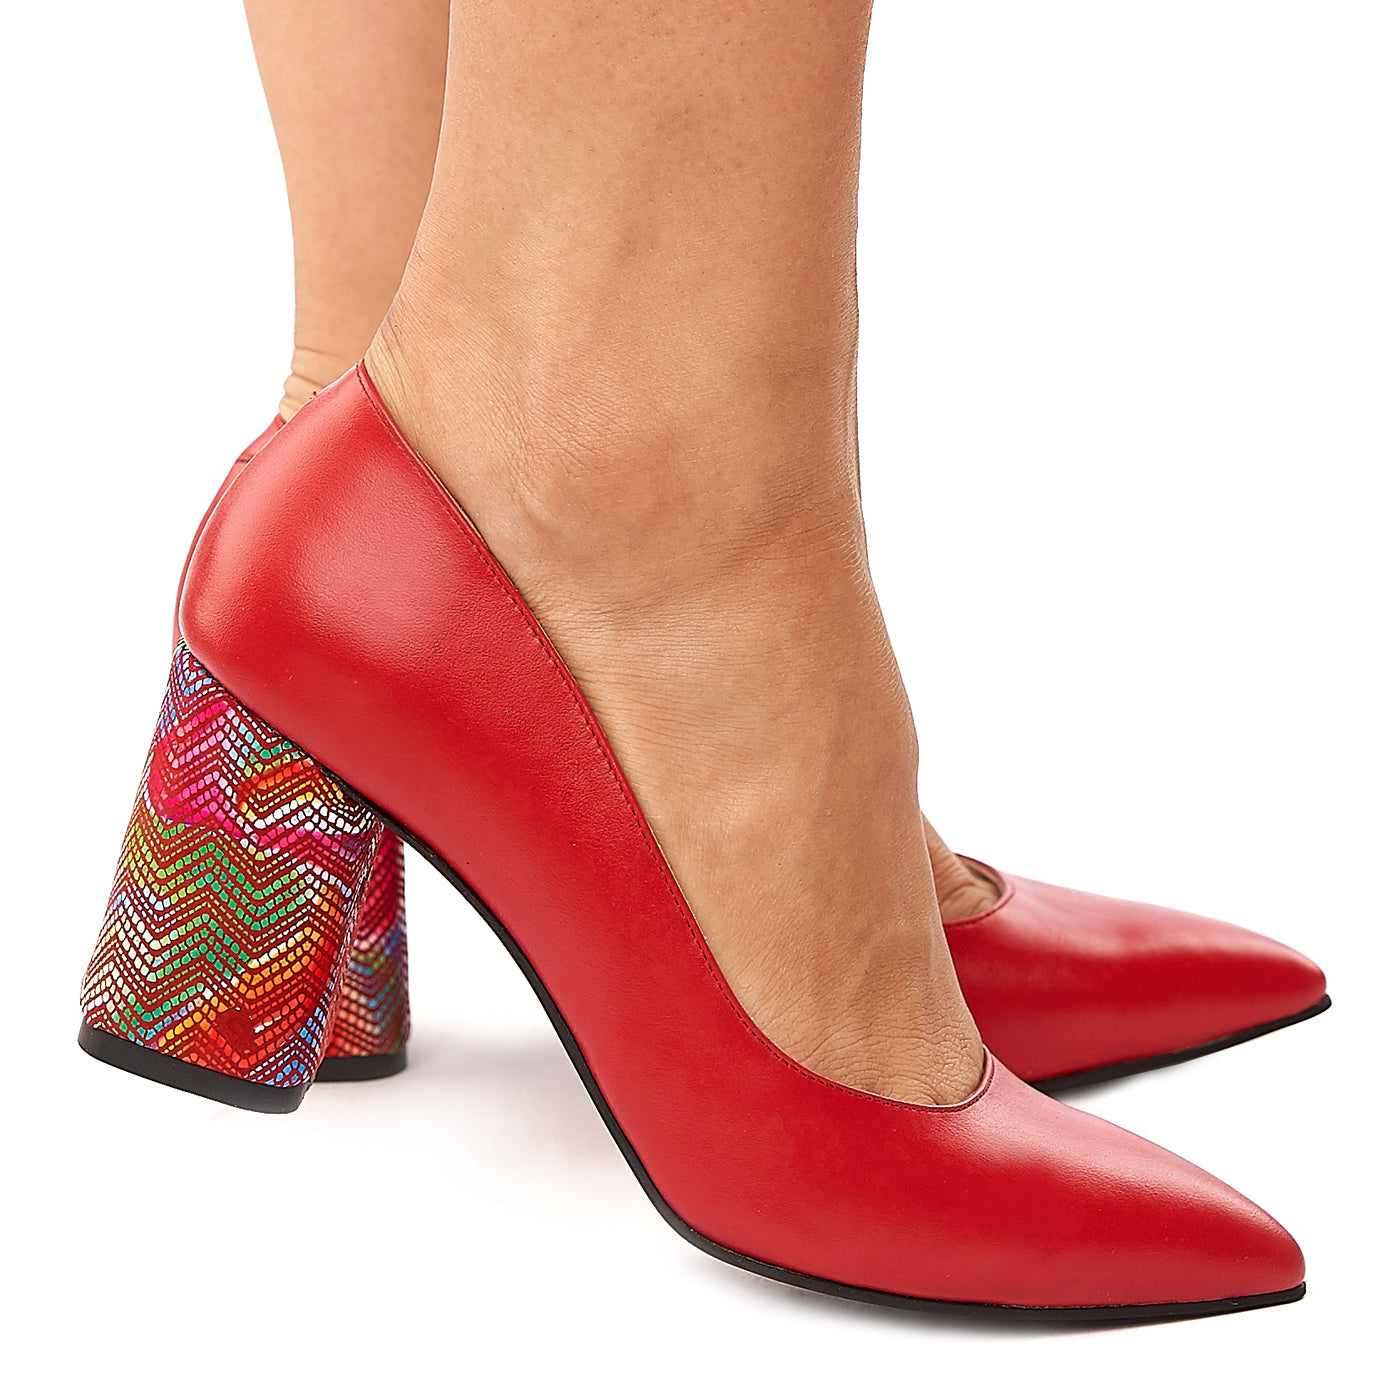 Pantofi dama din piele naturala rosie cu toc colorat 4201